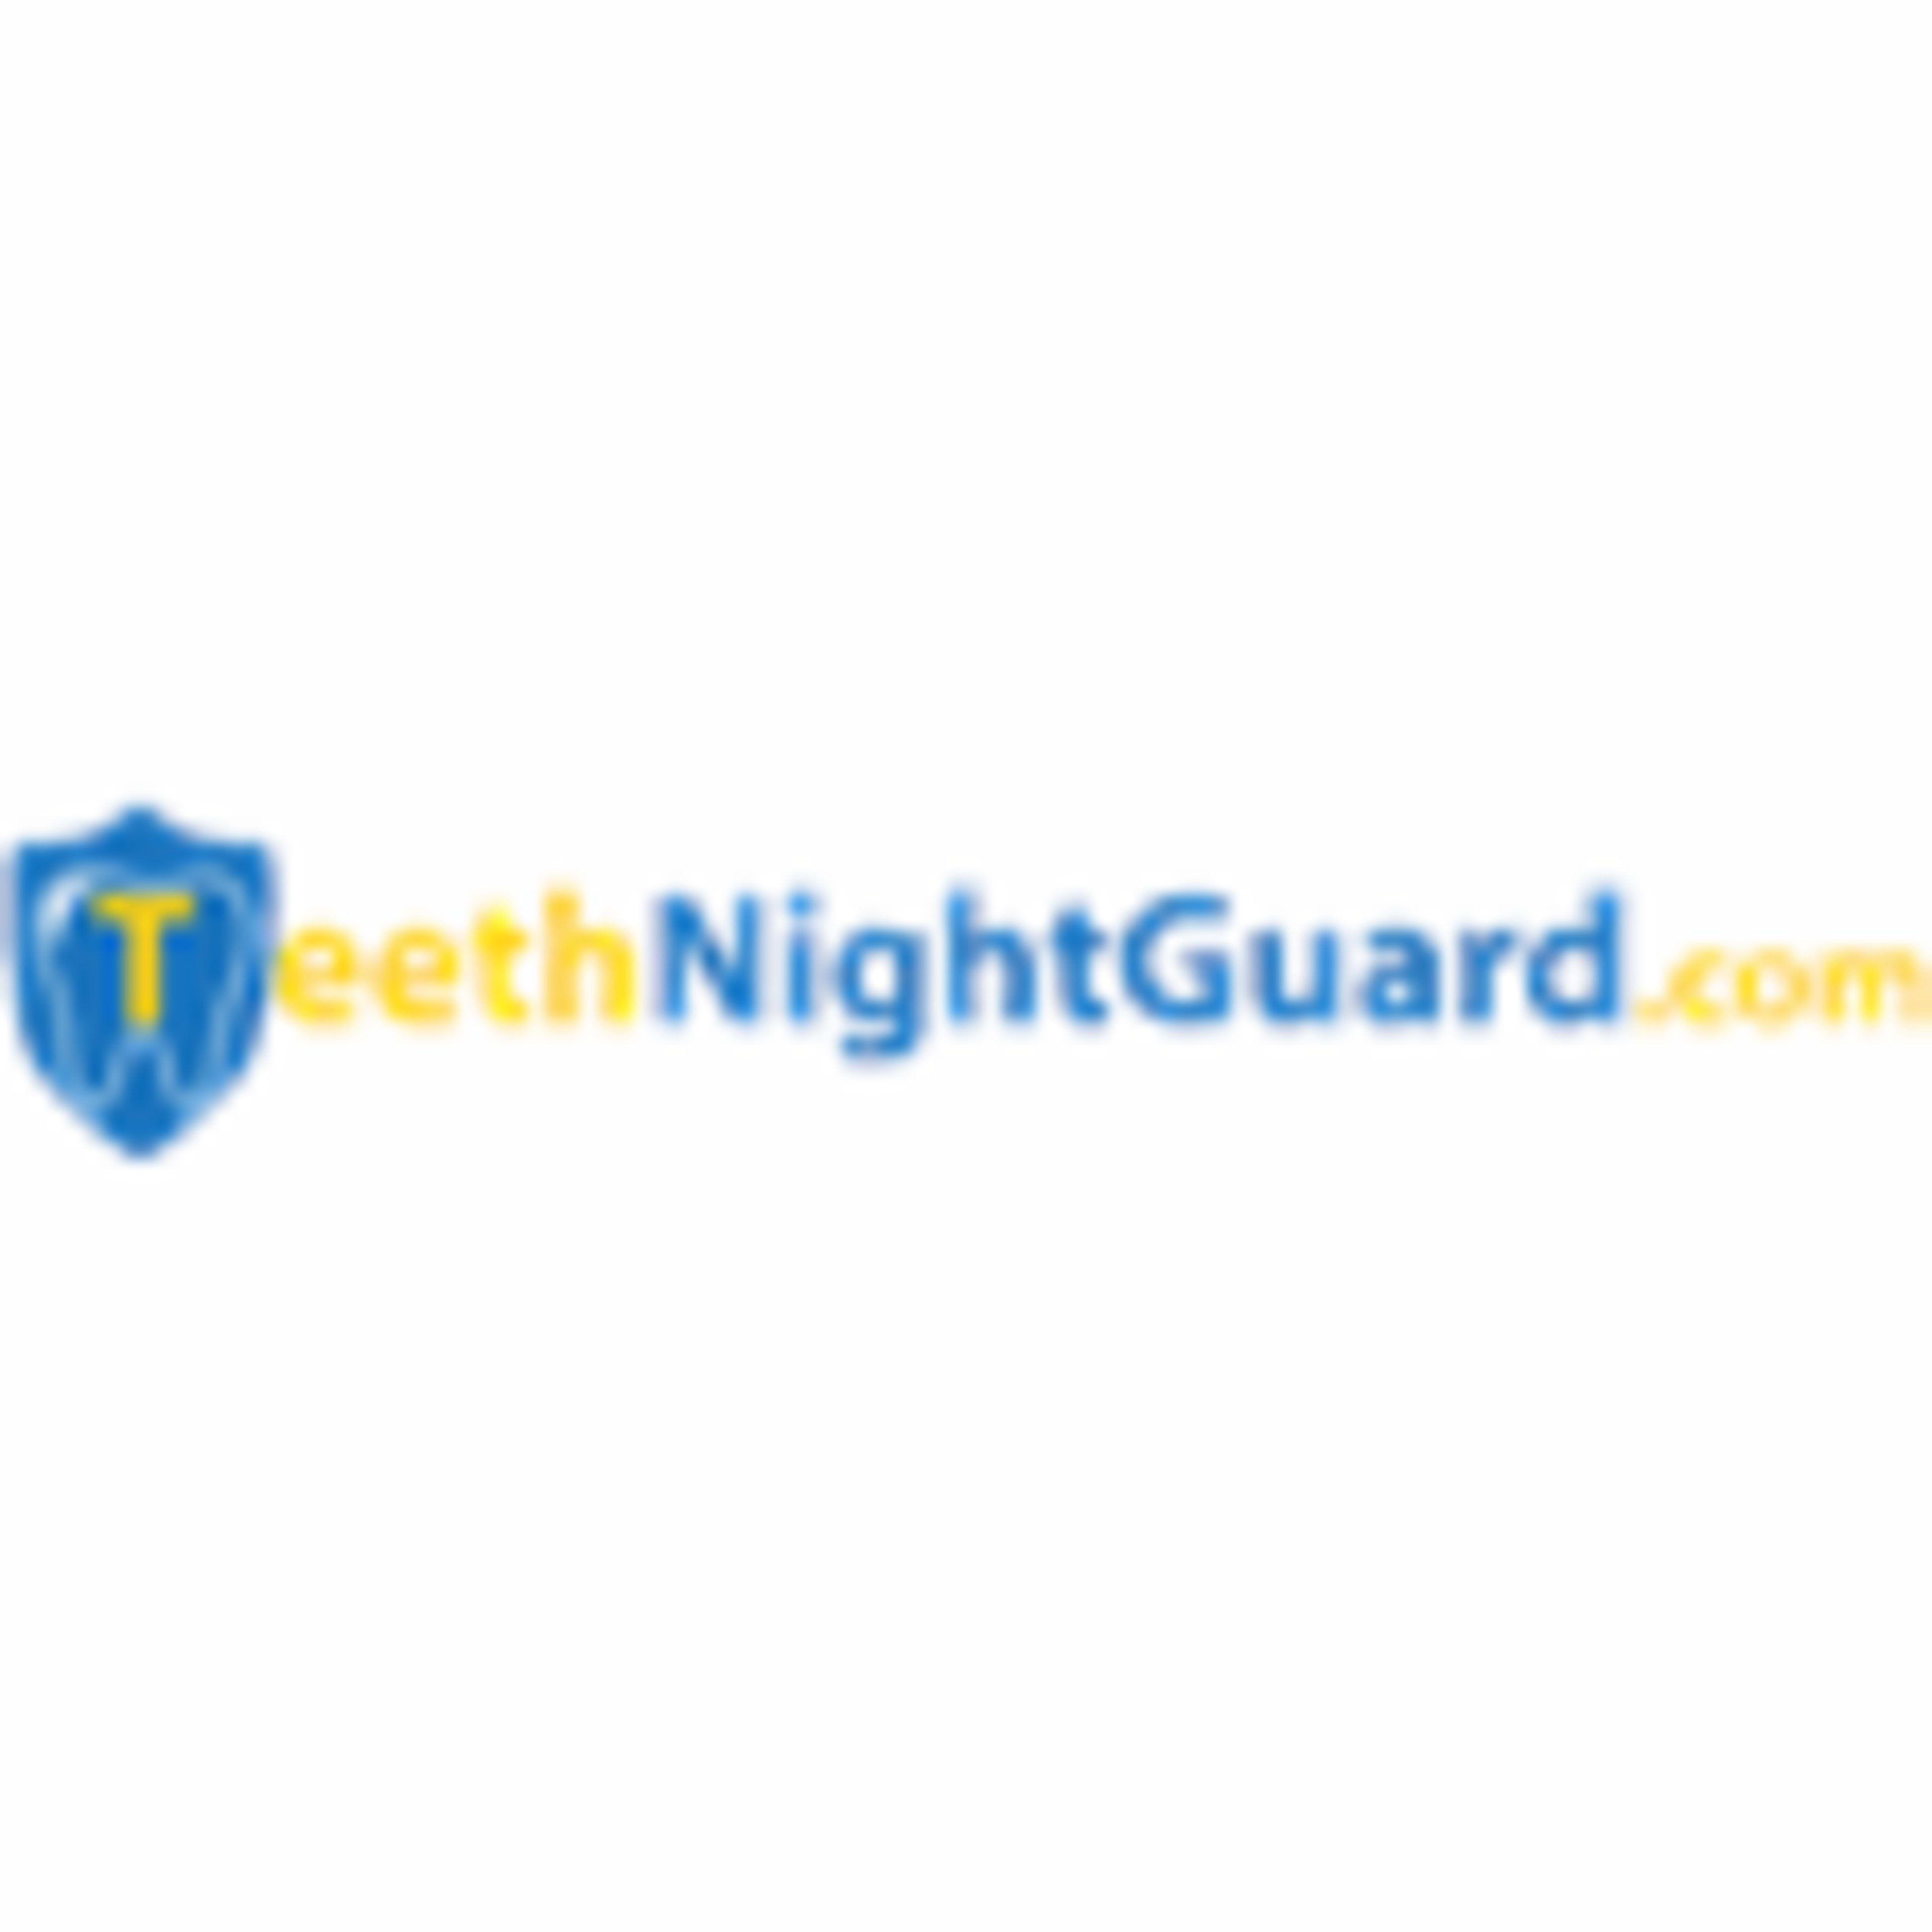 TeethNightGuard.com Code